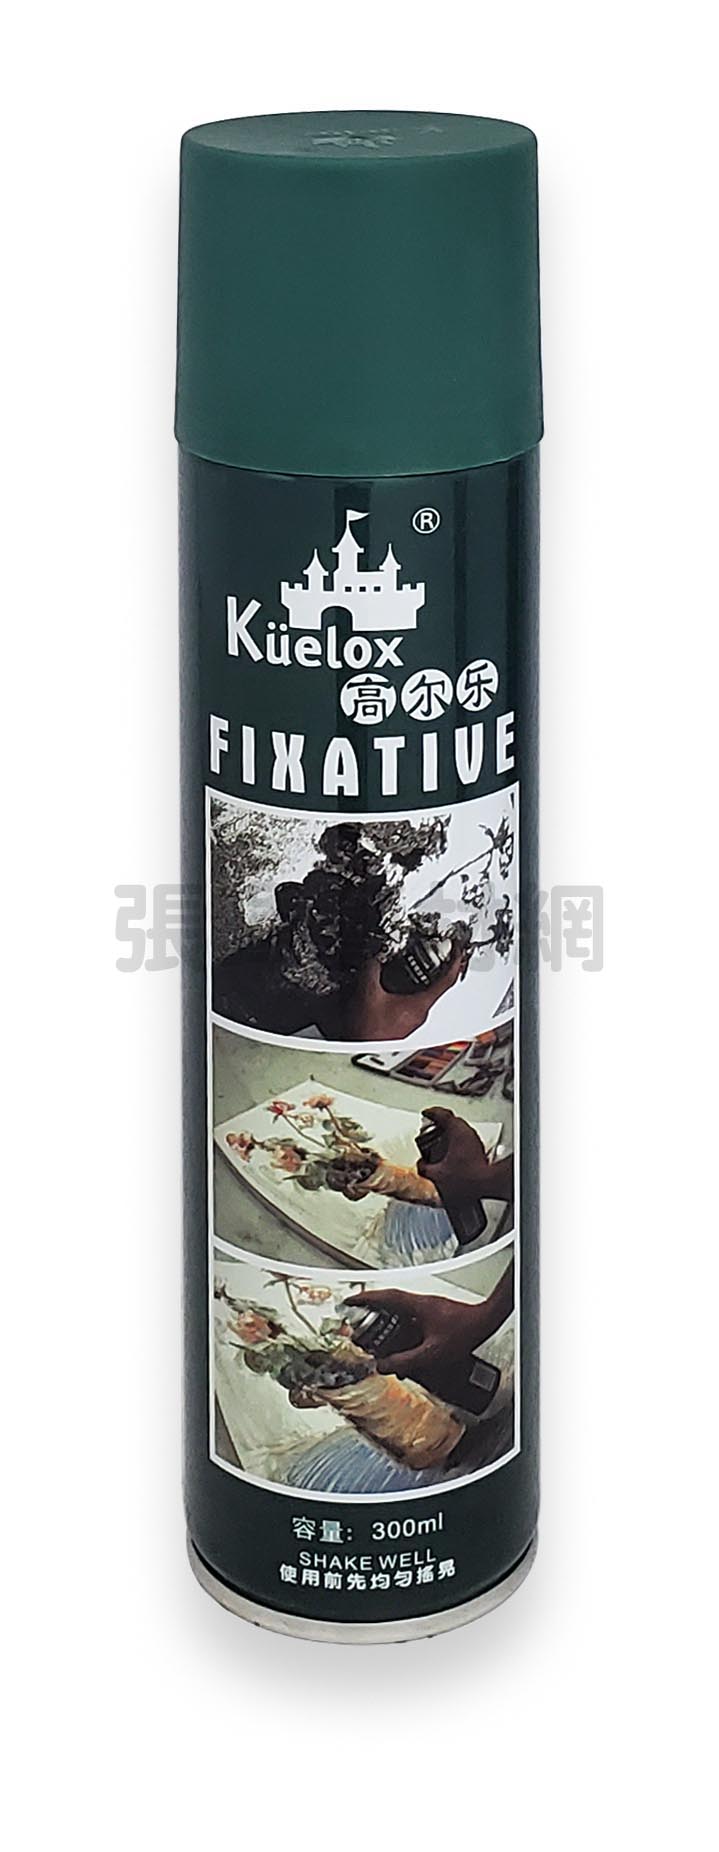 Kuelox Fixative Spray - 300ml